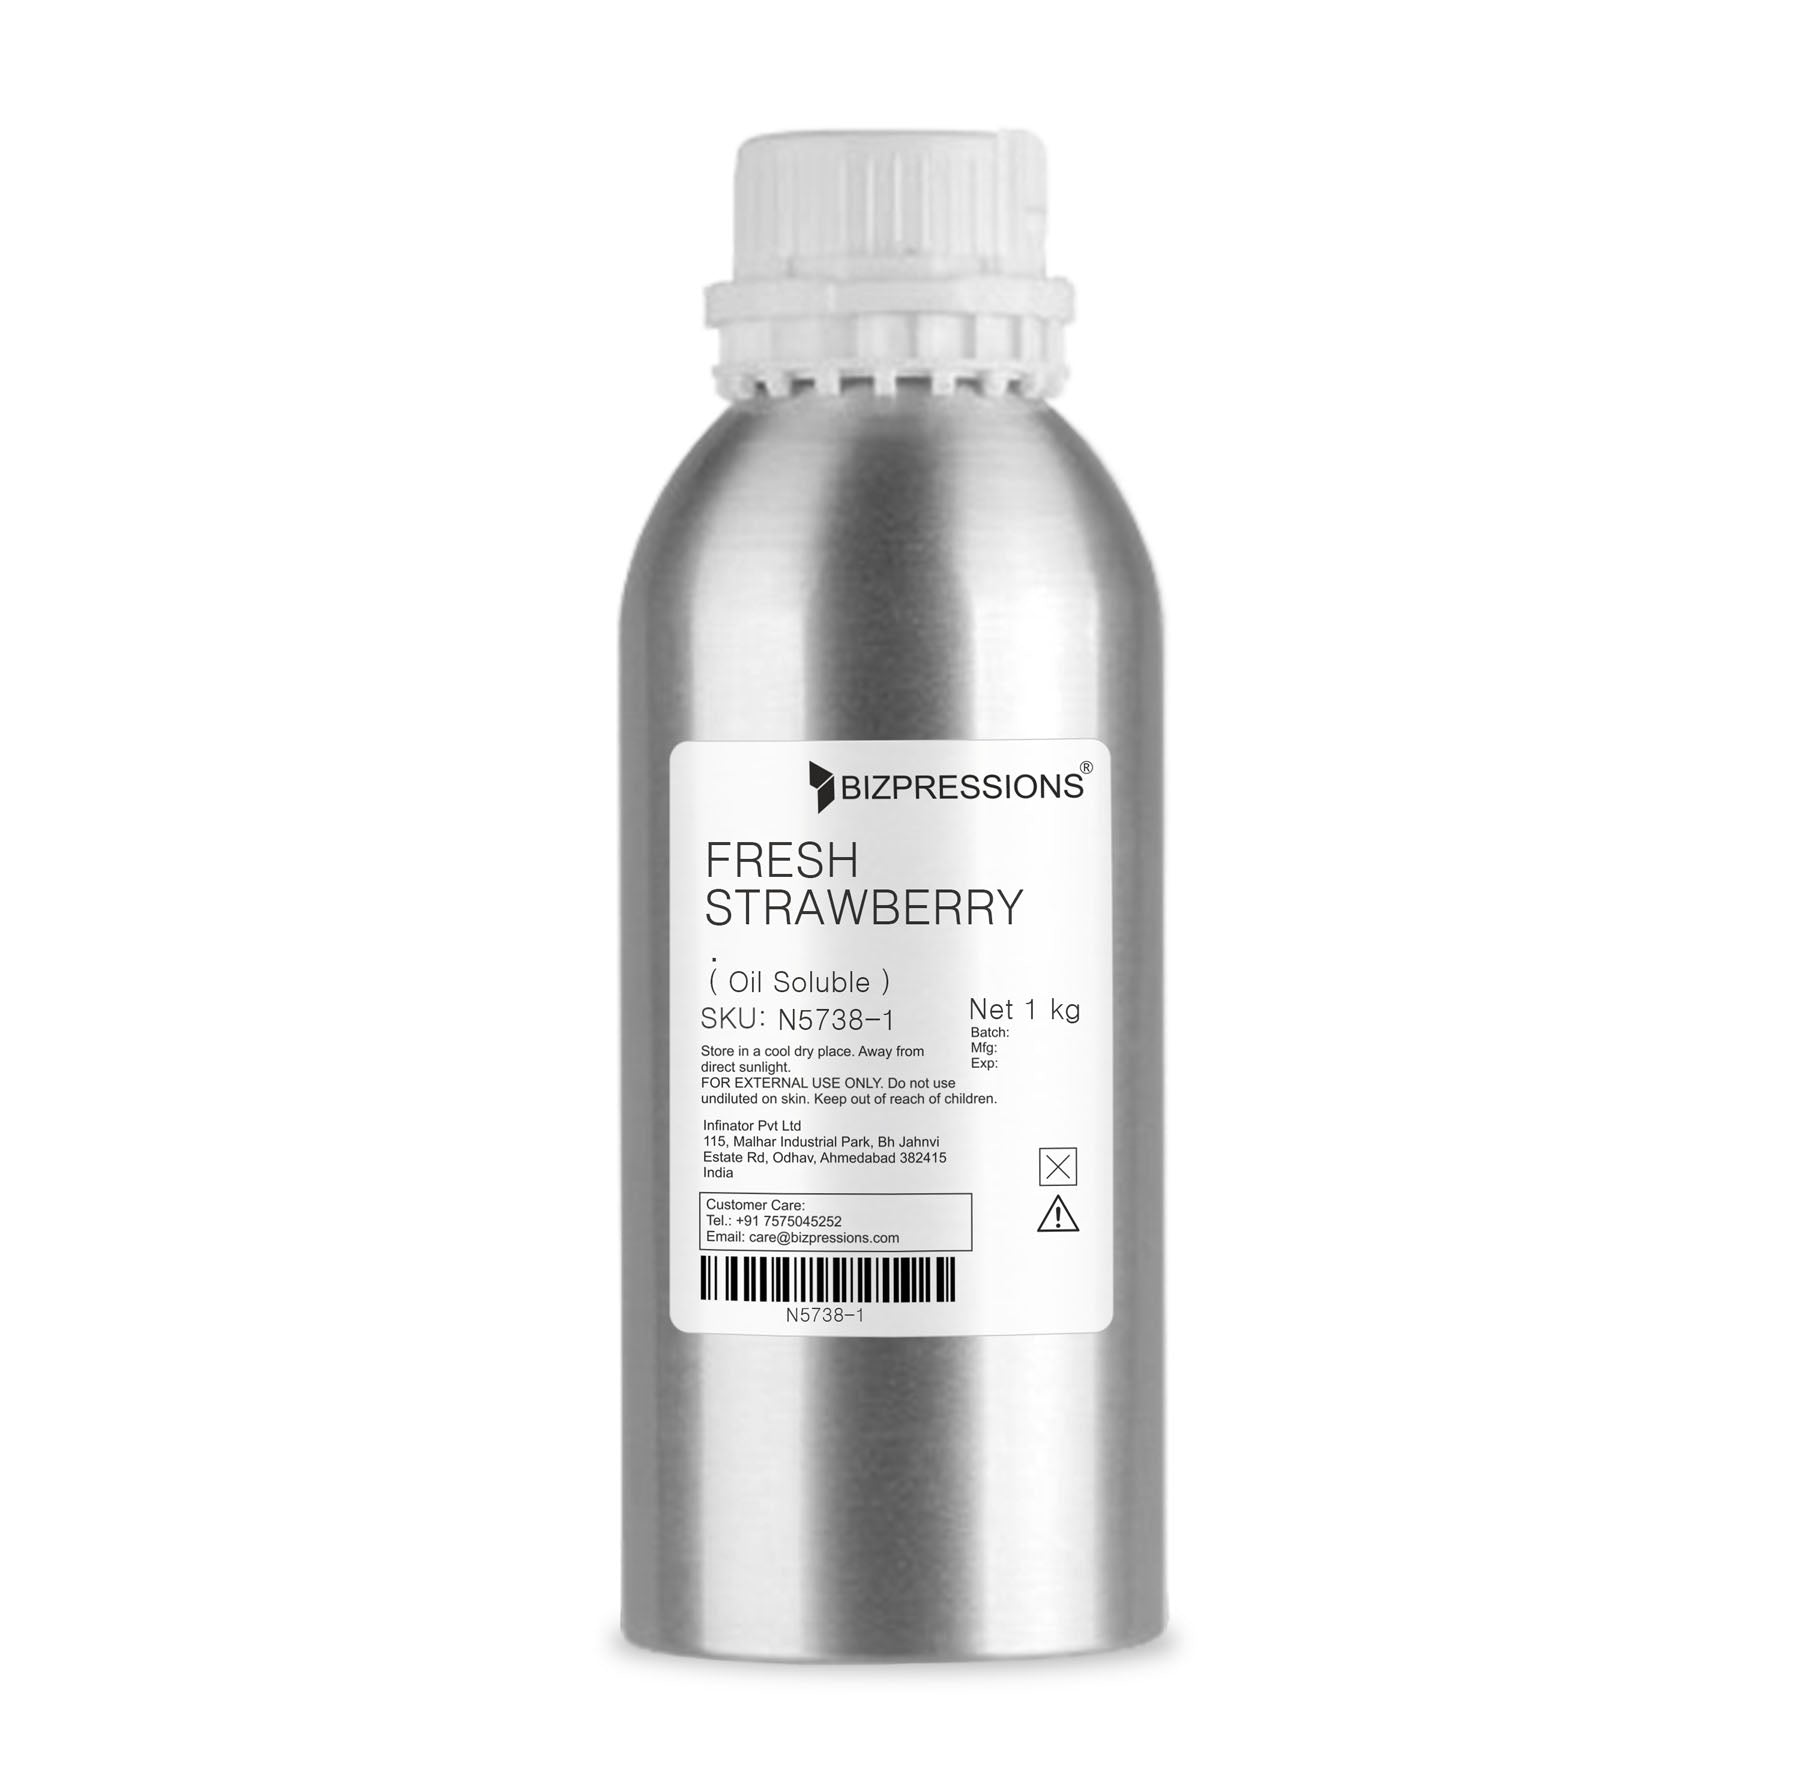 FRESH STRAWBERRY - Fragrance ( Oil Soluble ) - 1 kg